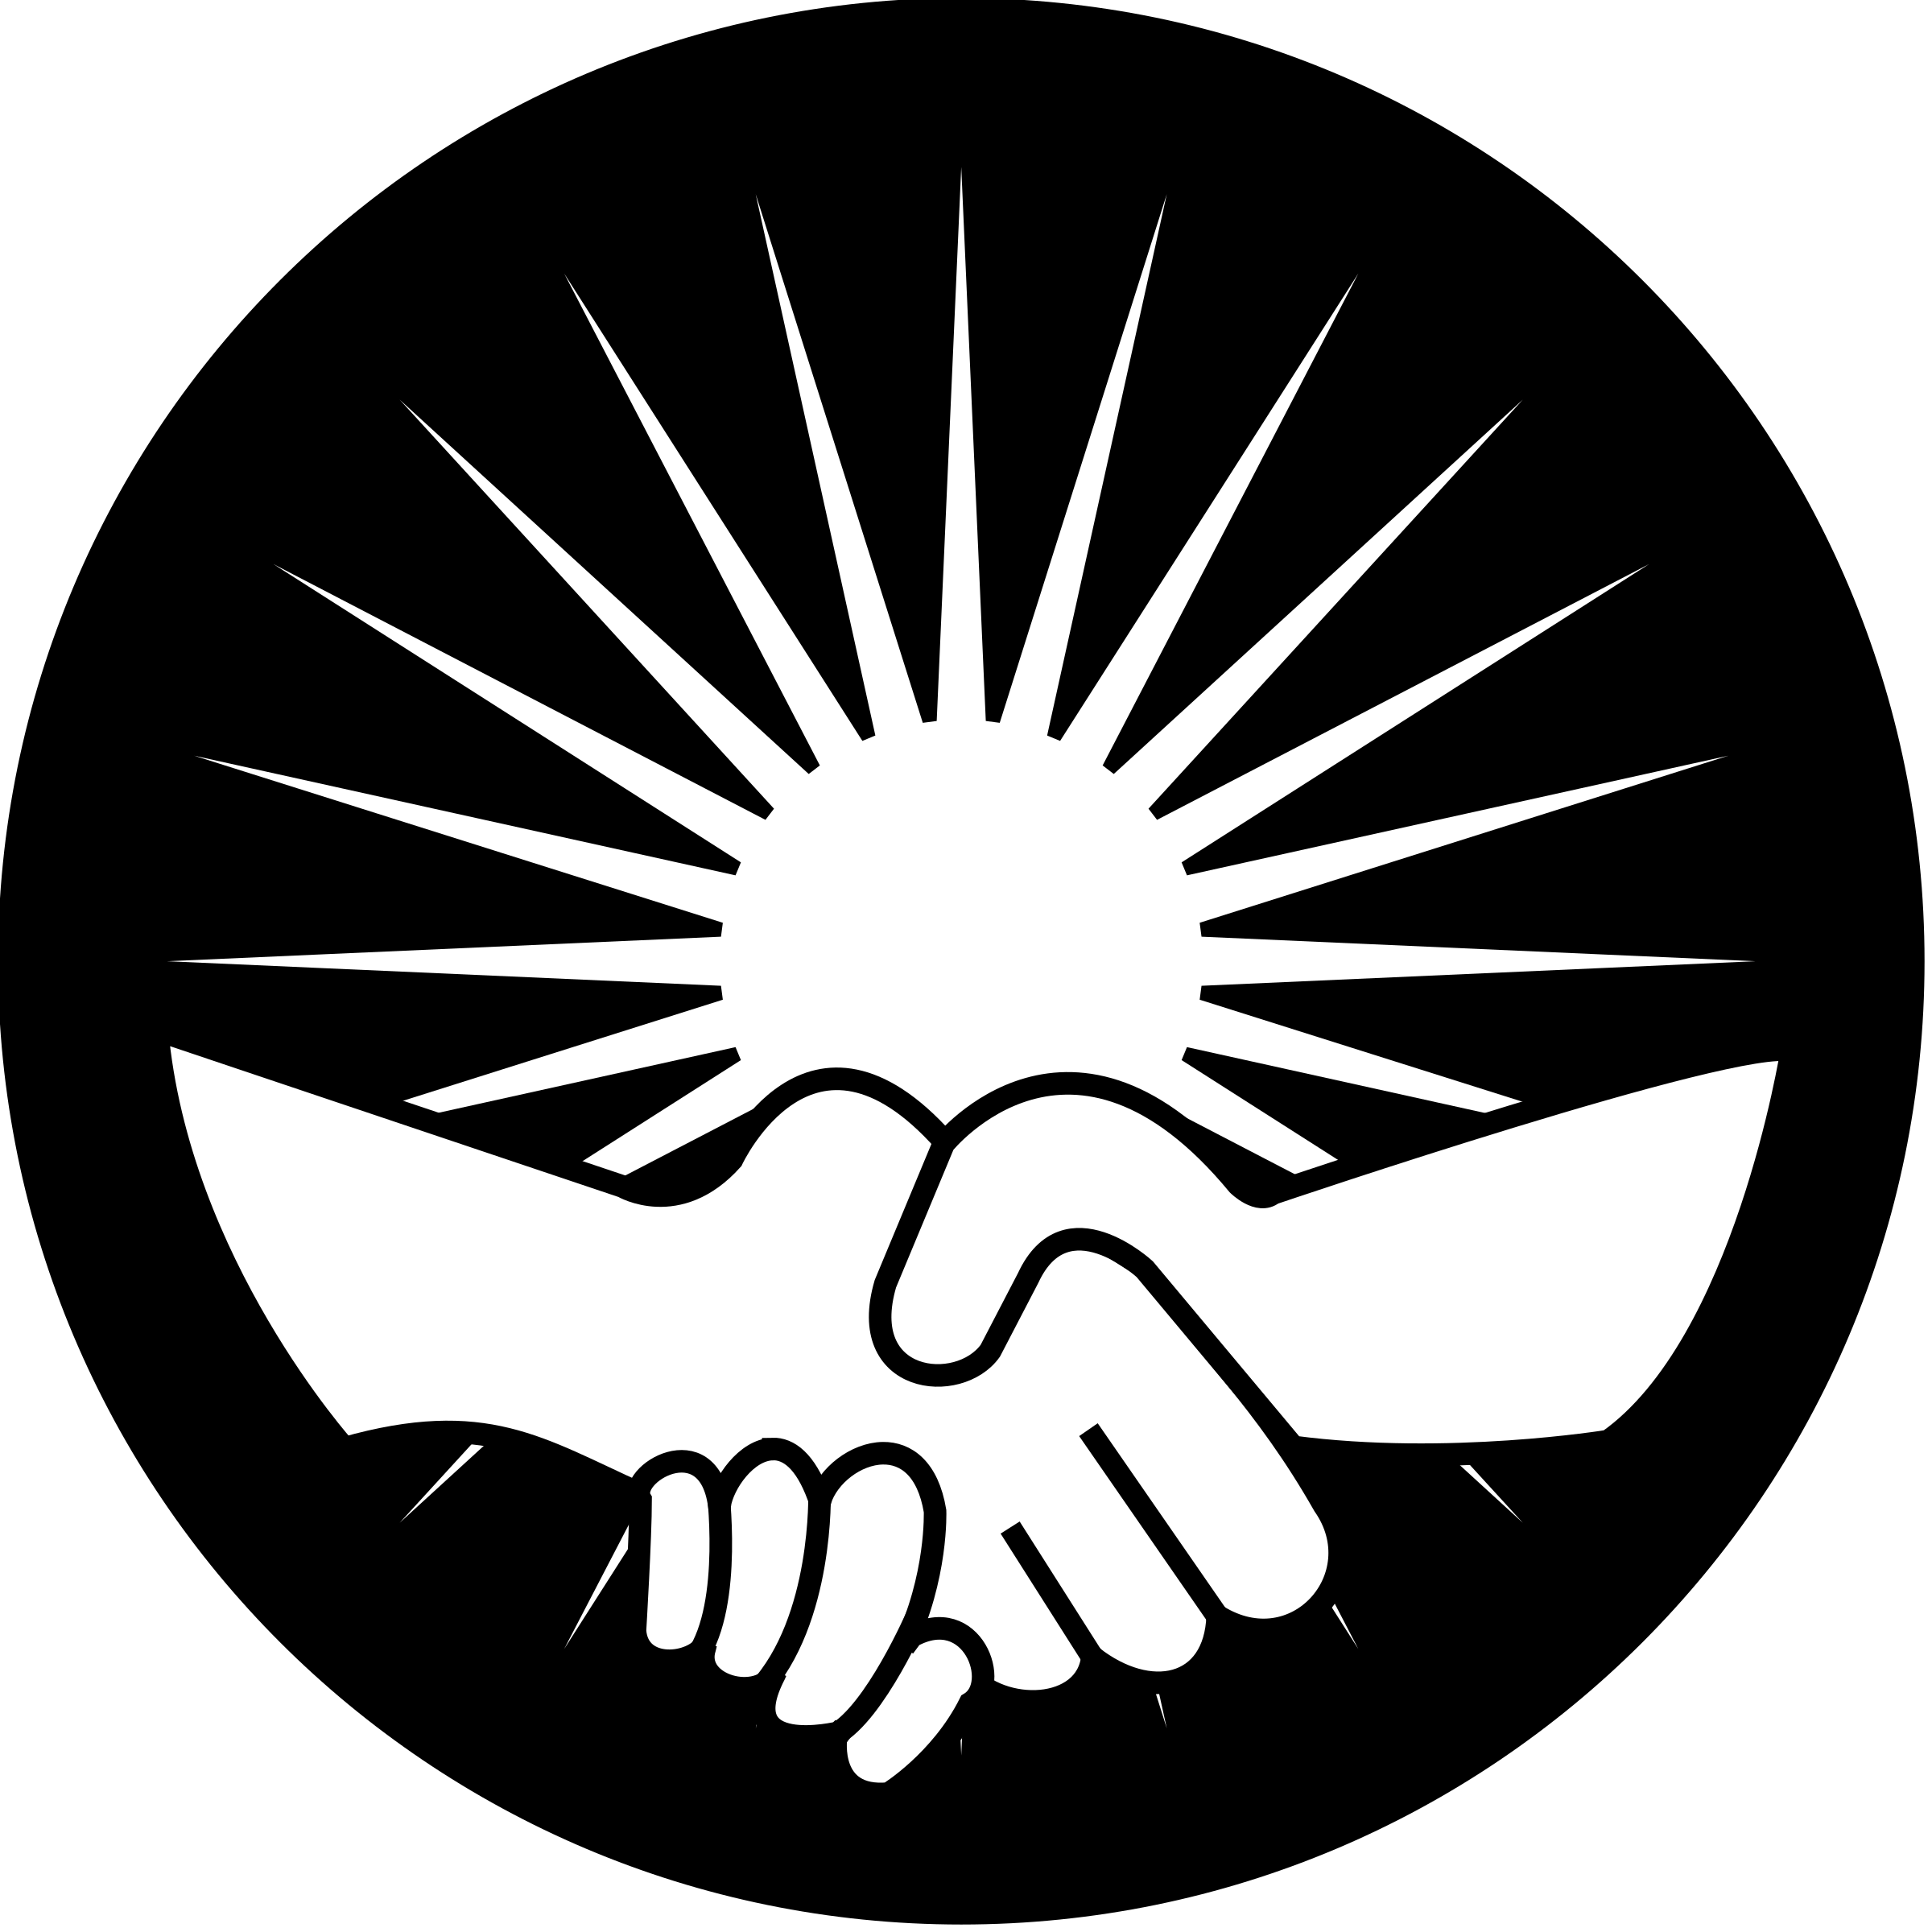 Christian handshake clipart image